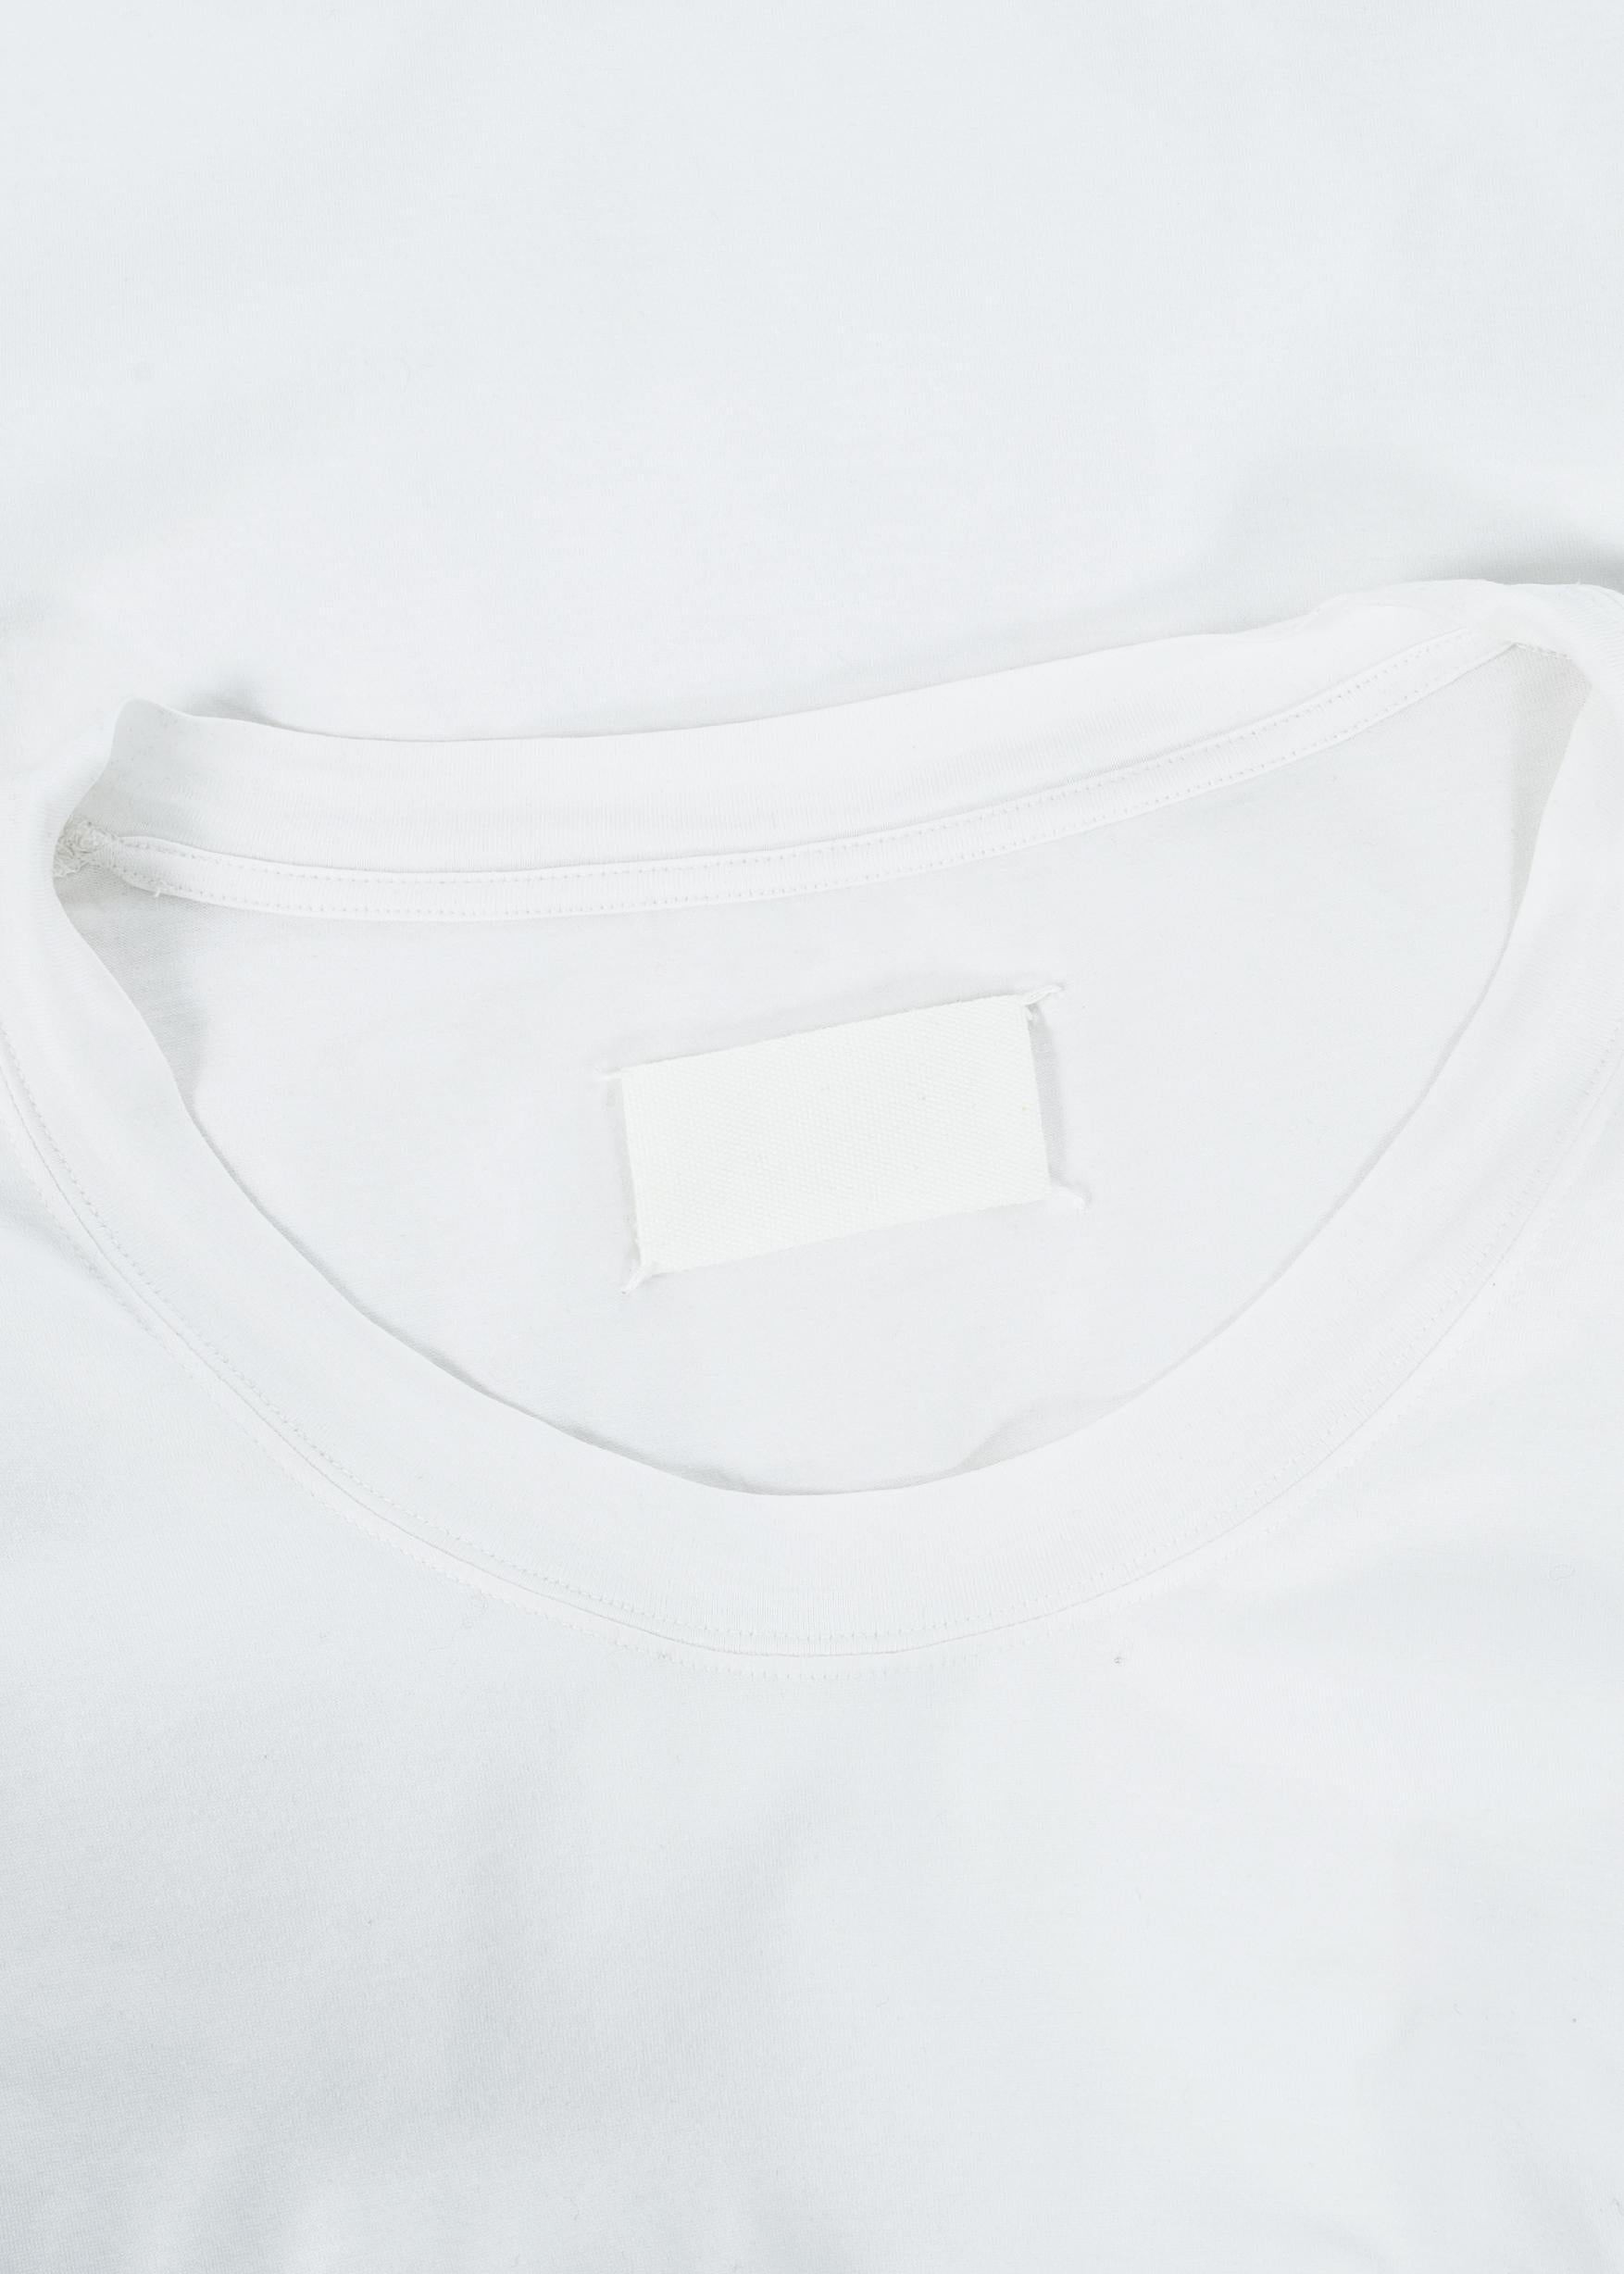 Women's Margiela white cotton draped t-shirt, c. 2000s